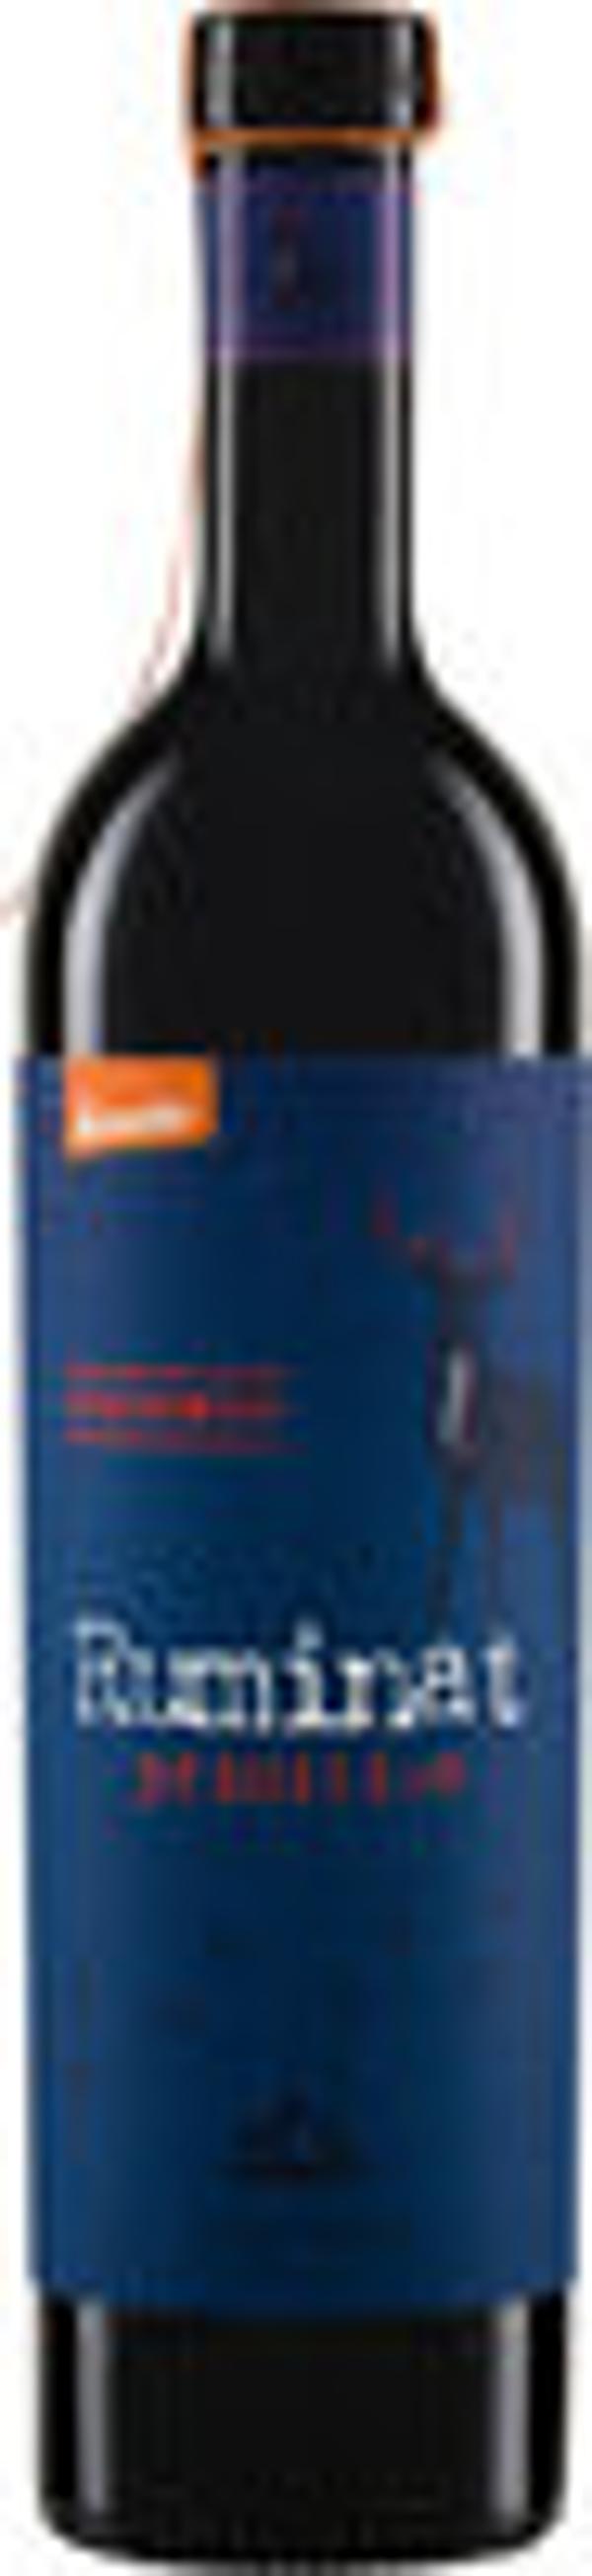 Produktfoto zu Ruminat Primitivo rot Flasche 0,75l